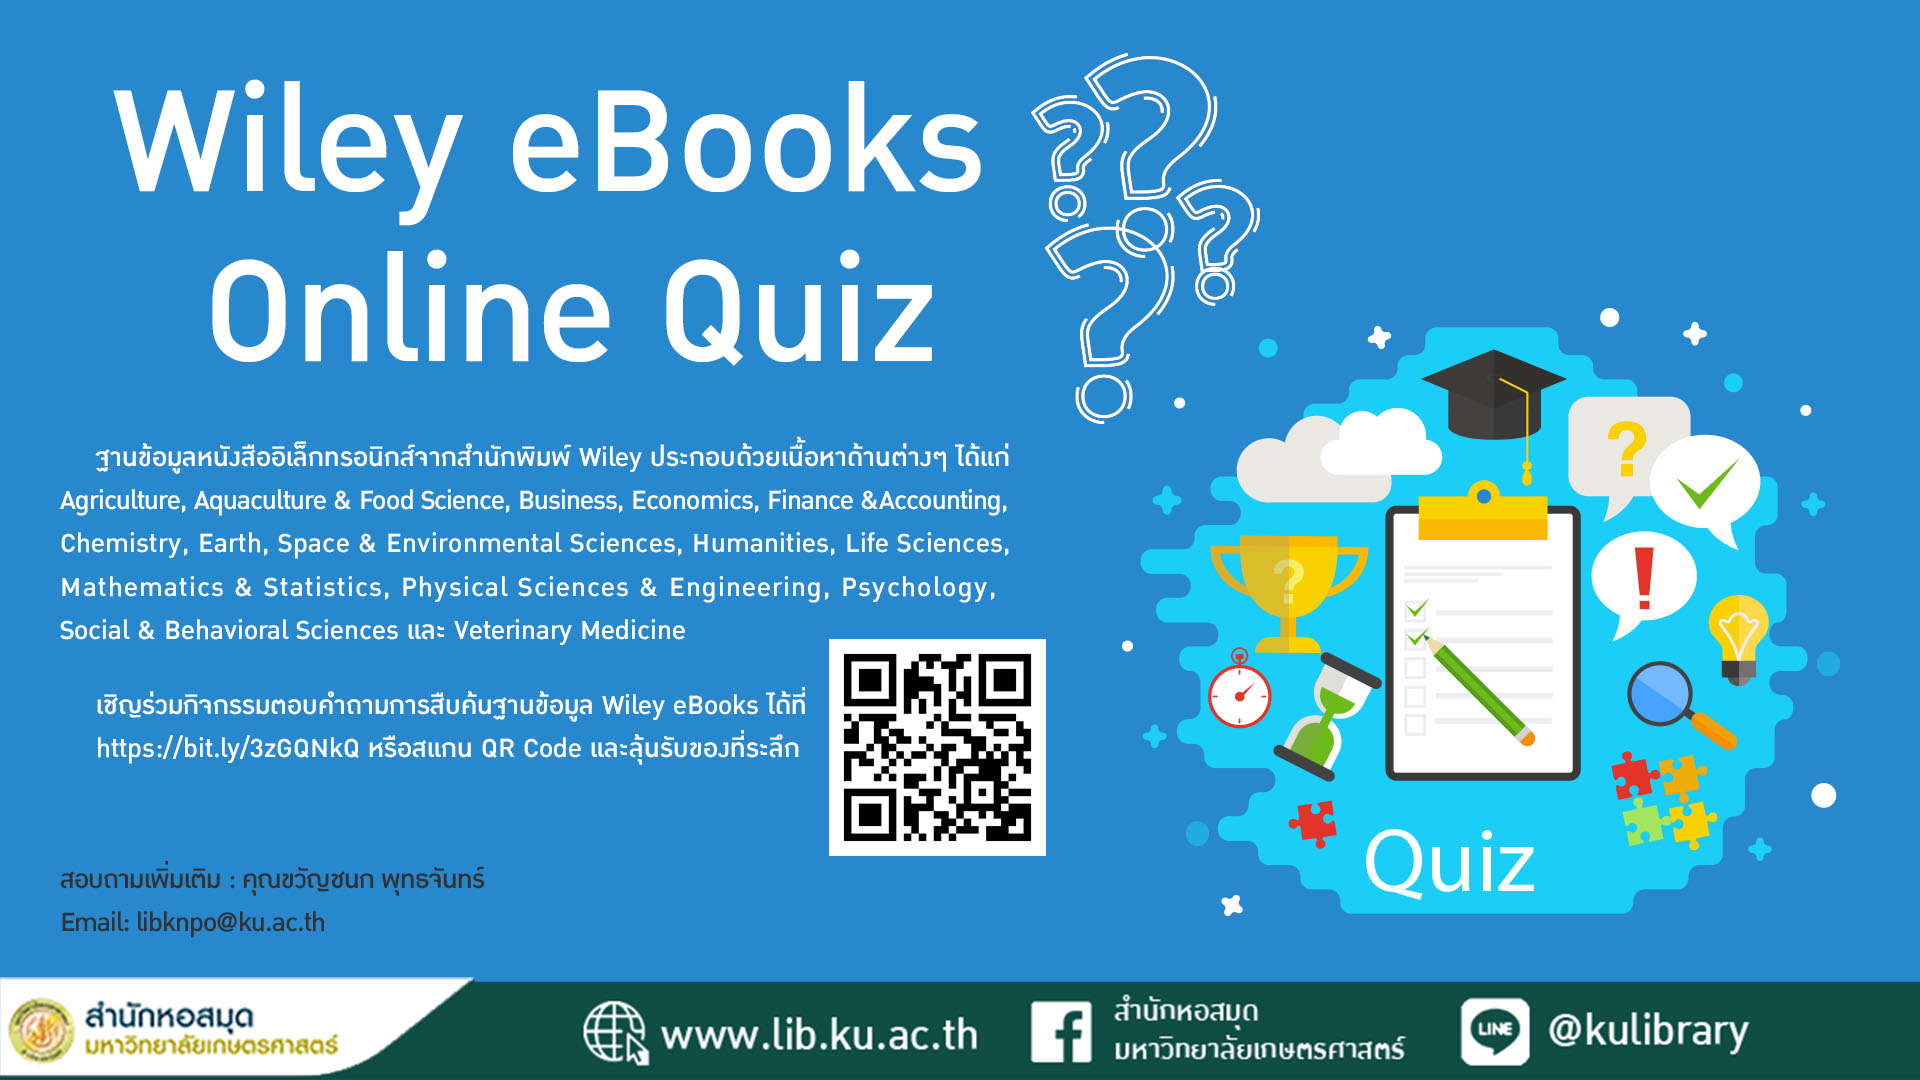 Wiley eBooks Online Quiz